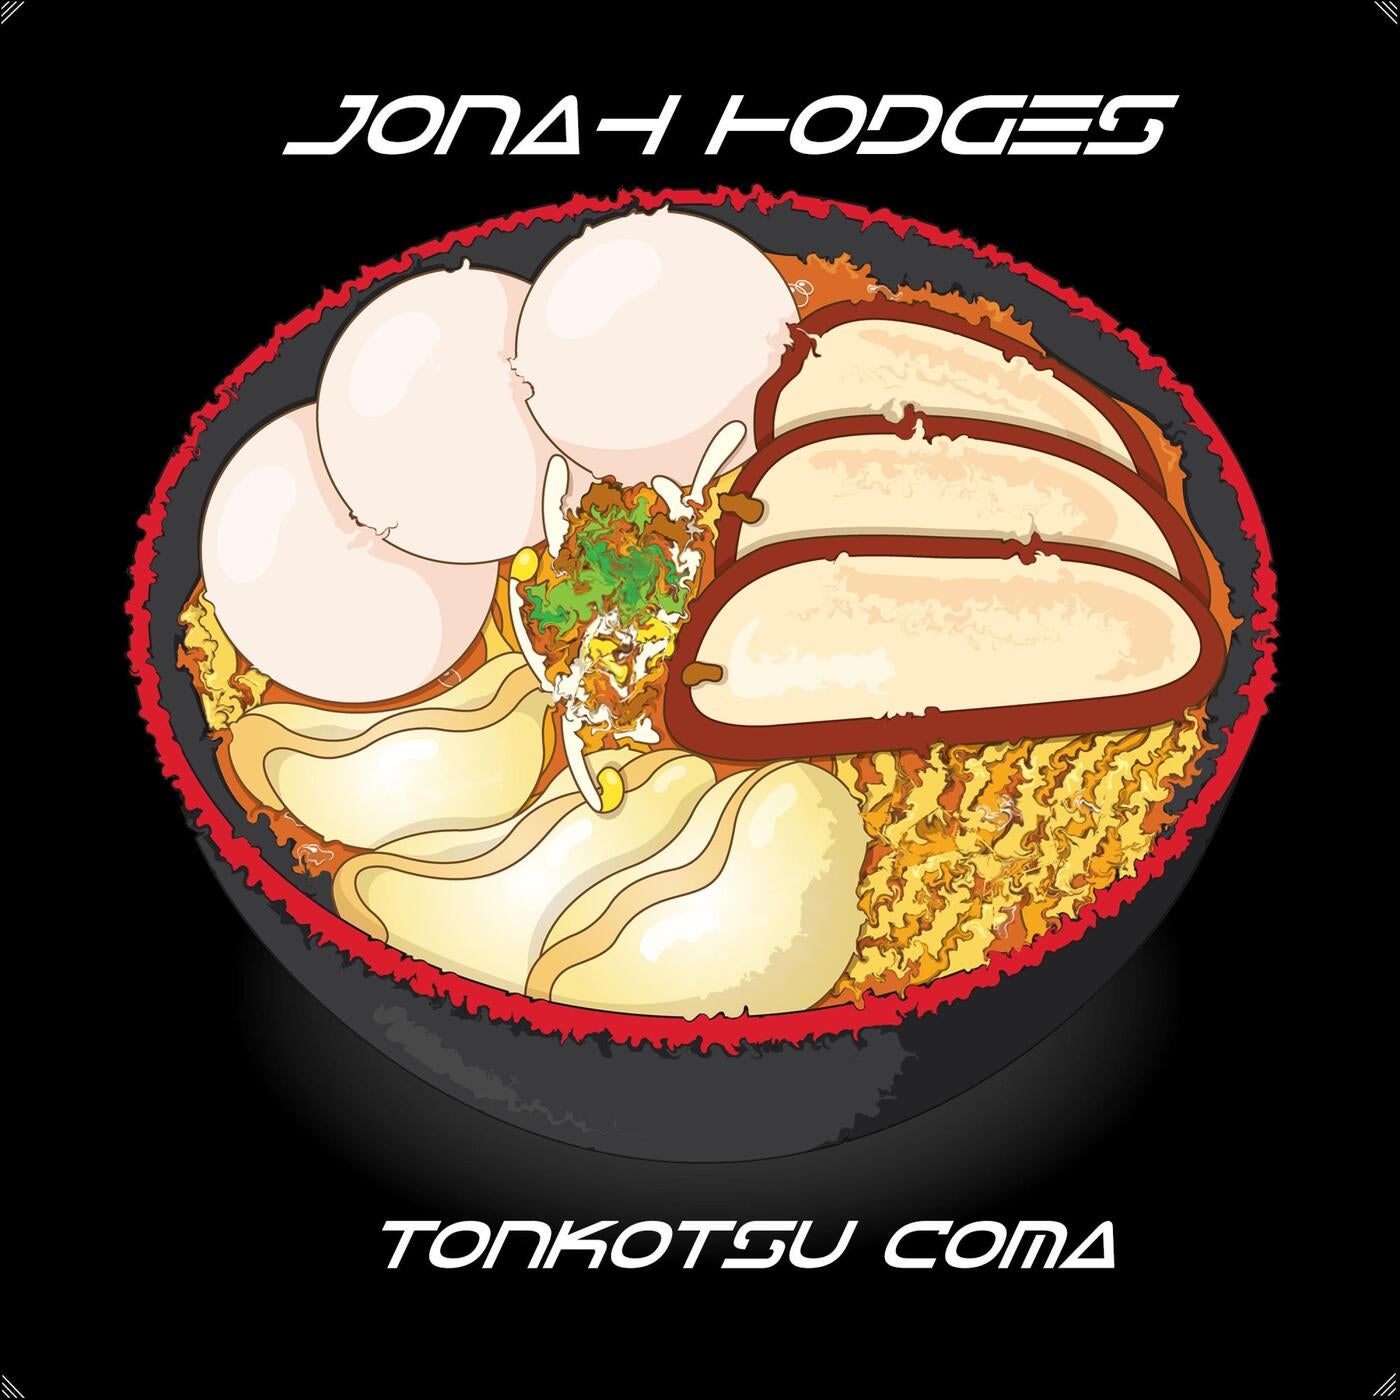 Tonkotsu Coma